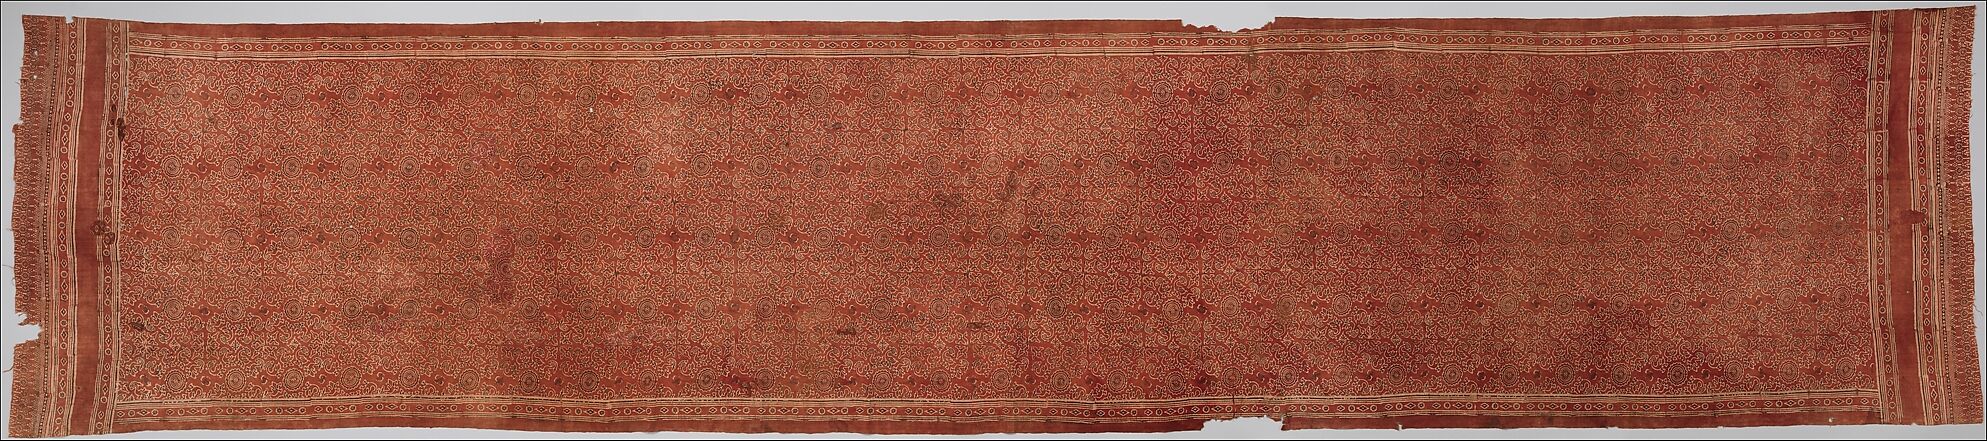 Textile with Sacred Goose (Hamsa) Design